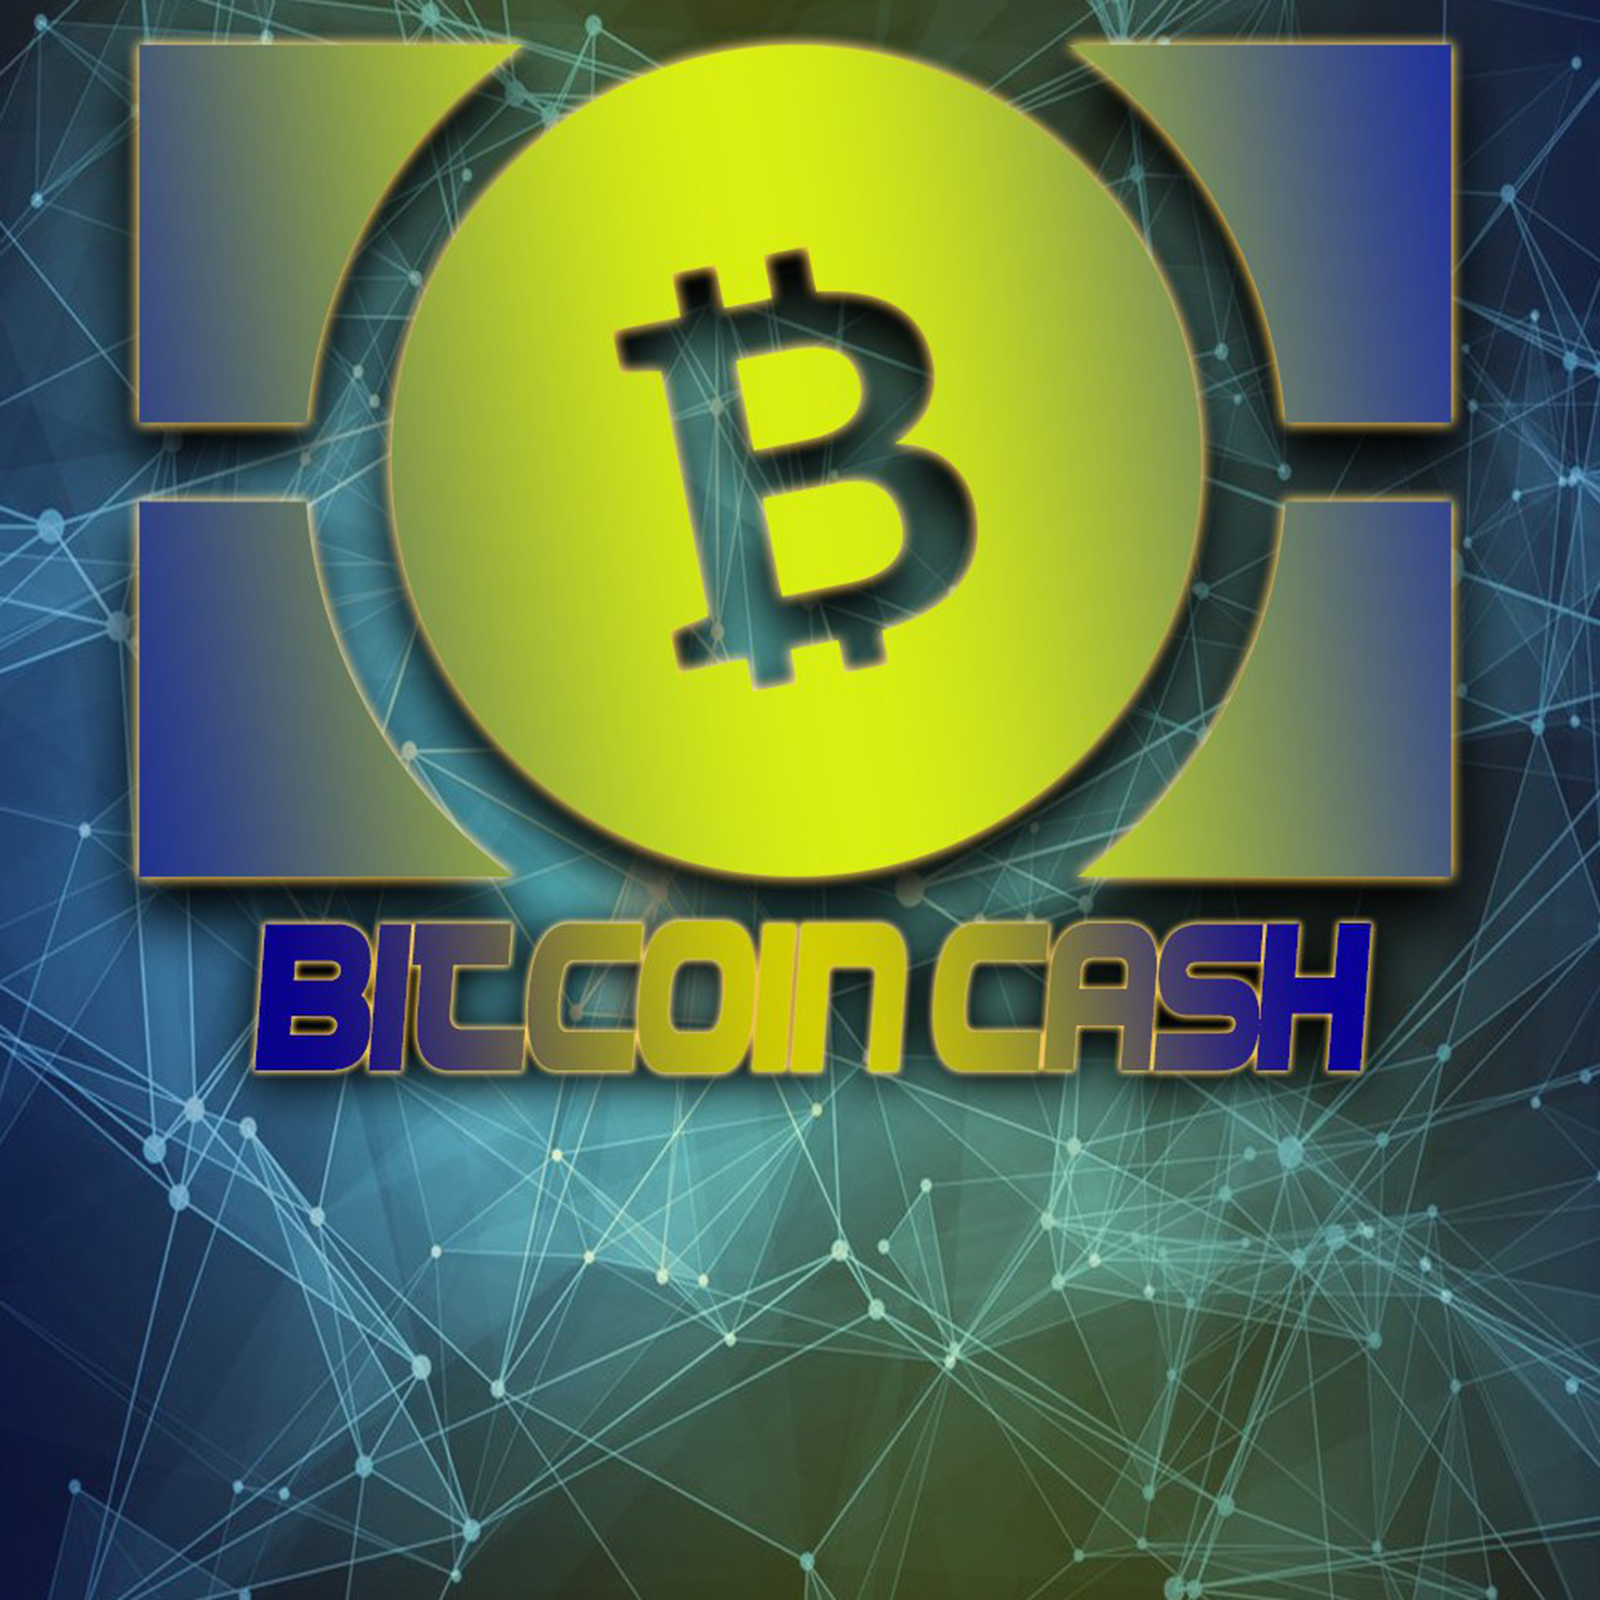 ABC Developer Amaury Séchet on the Future of Bitcoin Cash